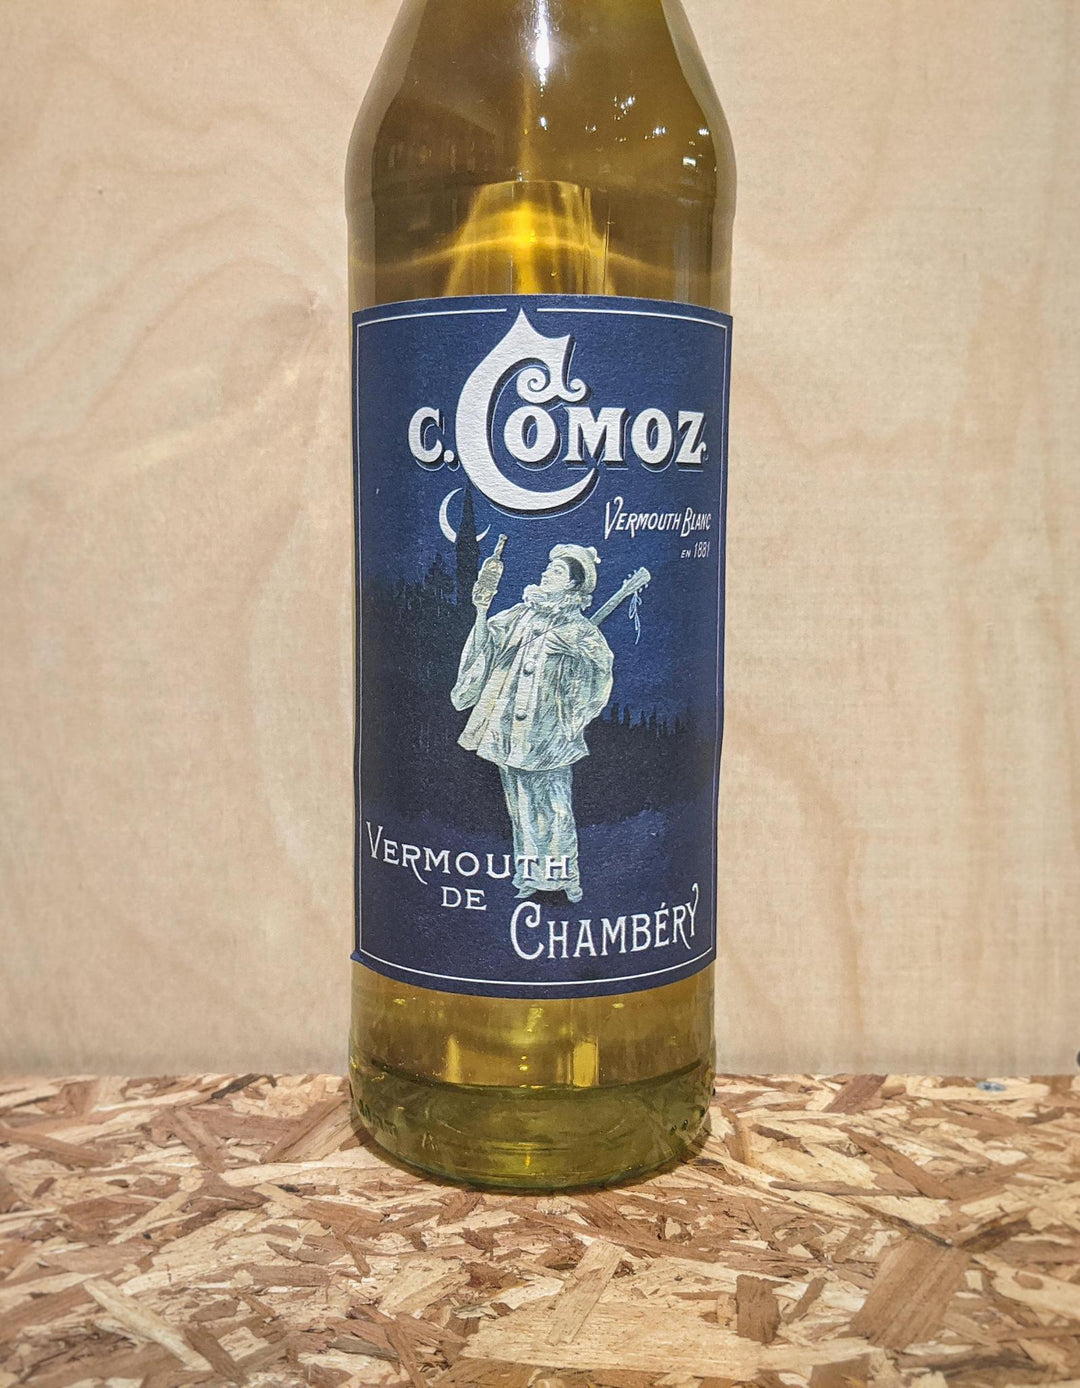 C. Comoz Vermouth de Chambery Blanc NV (Savoie, France)